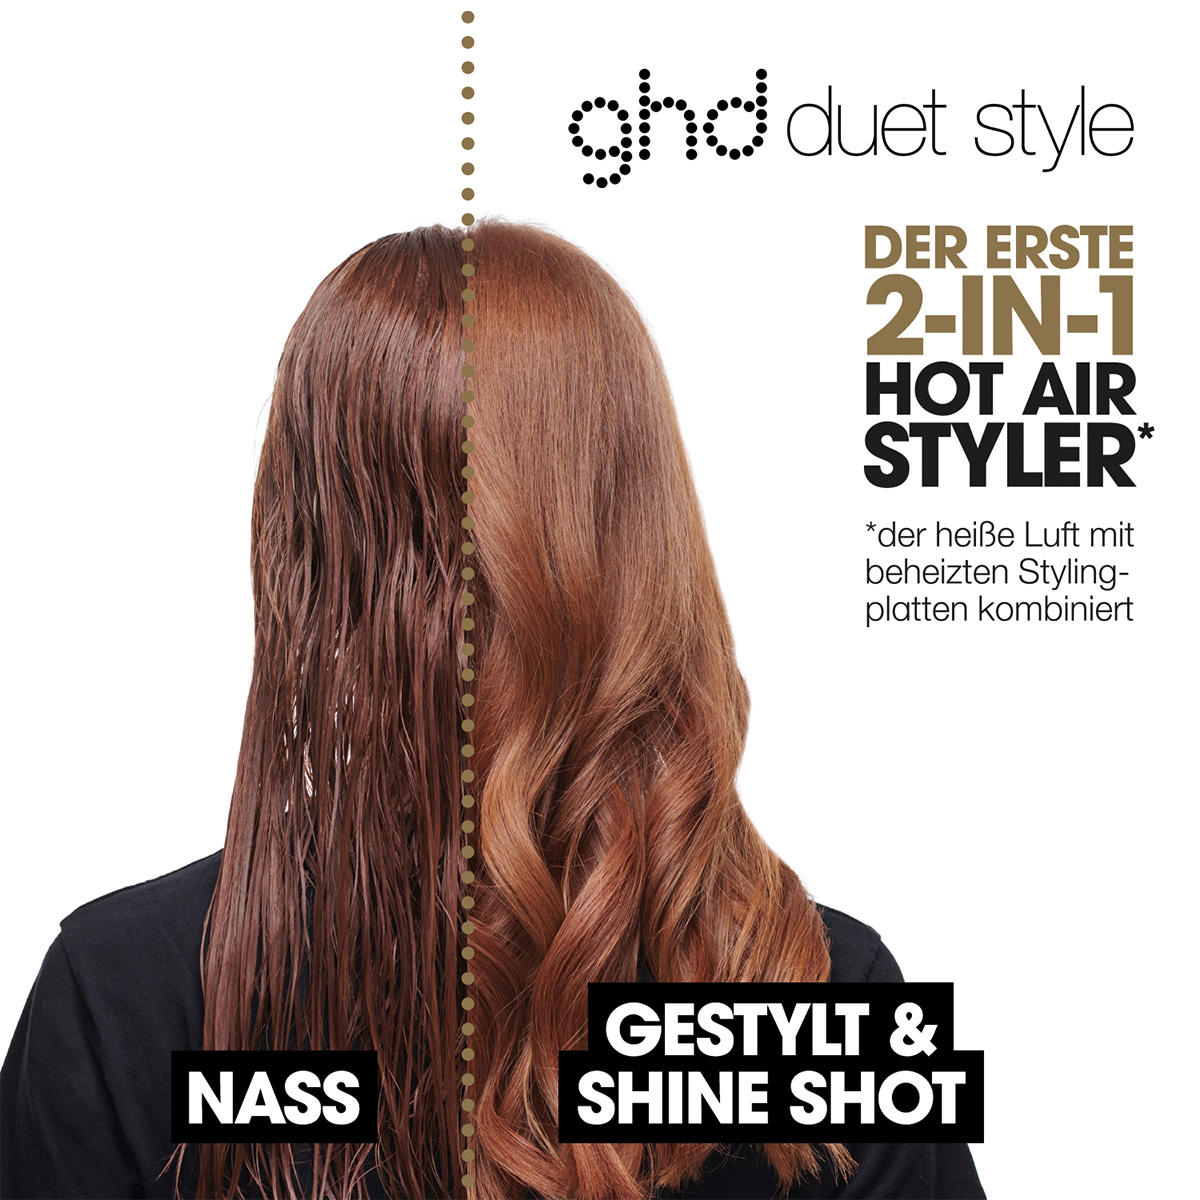 ghd Hot Air Styler duet style 2-in-1 weiß - 7